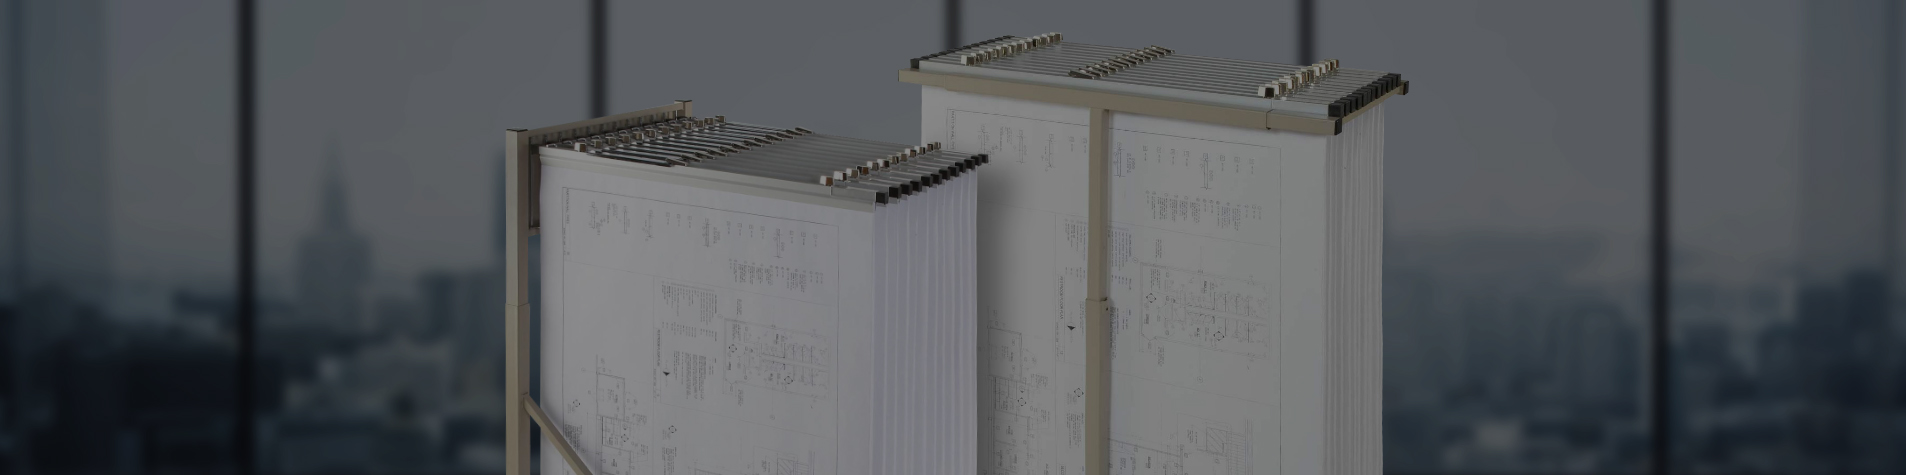 Heavy Duty Mobile Blueprint Storage Rack with 12 Pivot Brackets (Model –  Brookside Design